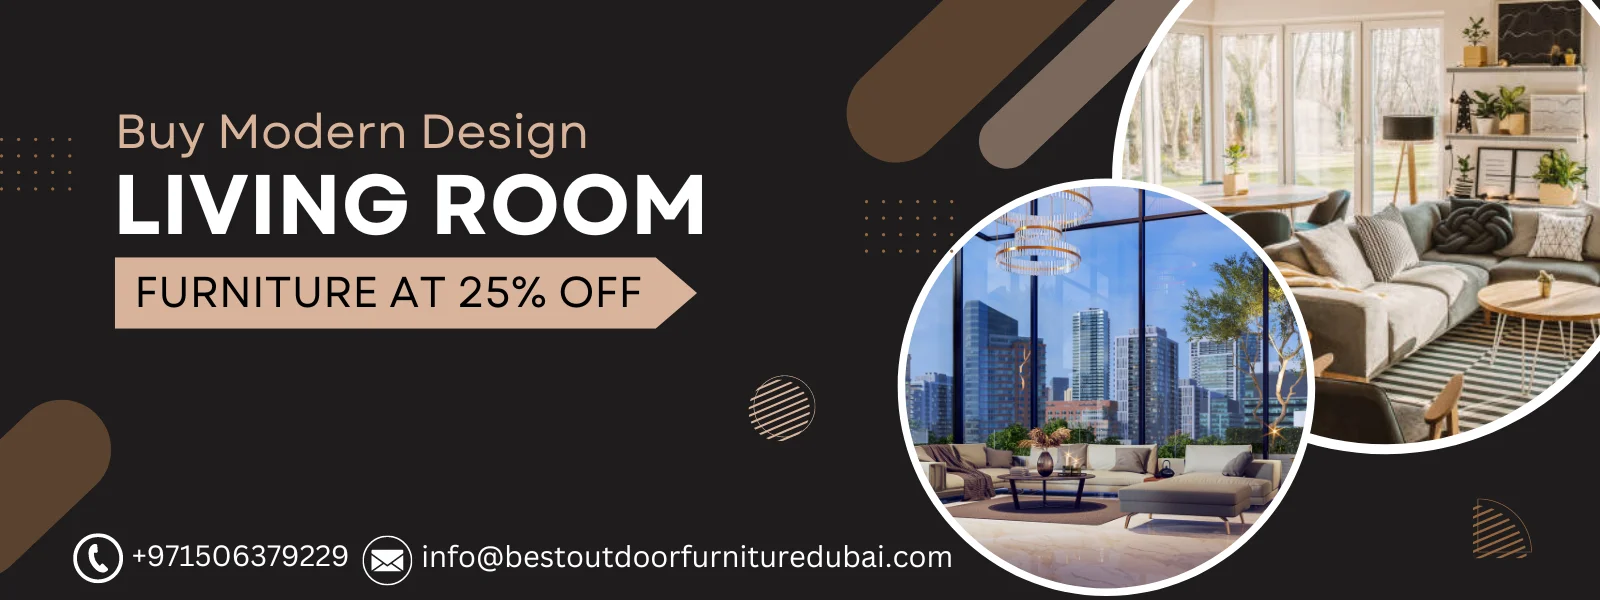 Modern design living room furniture in Dubai